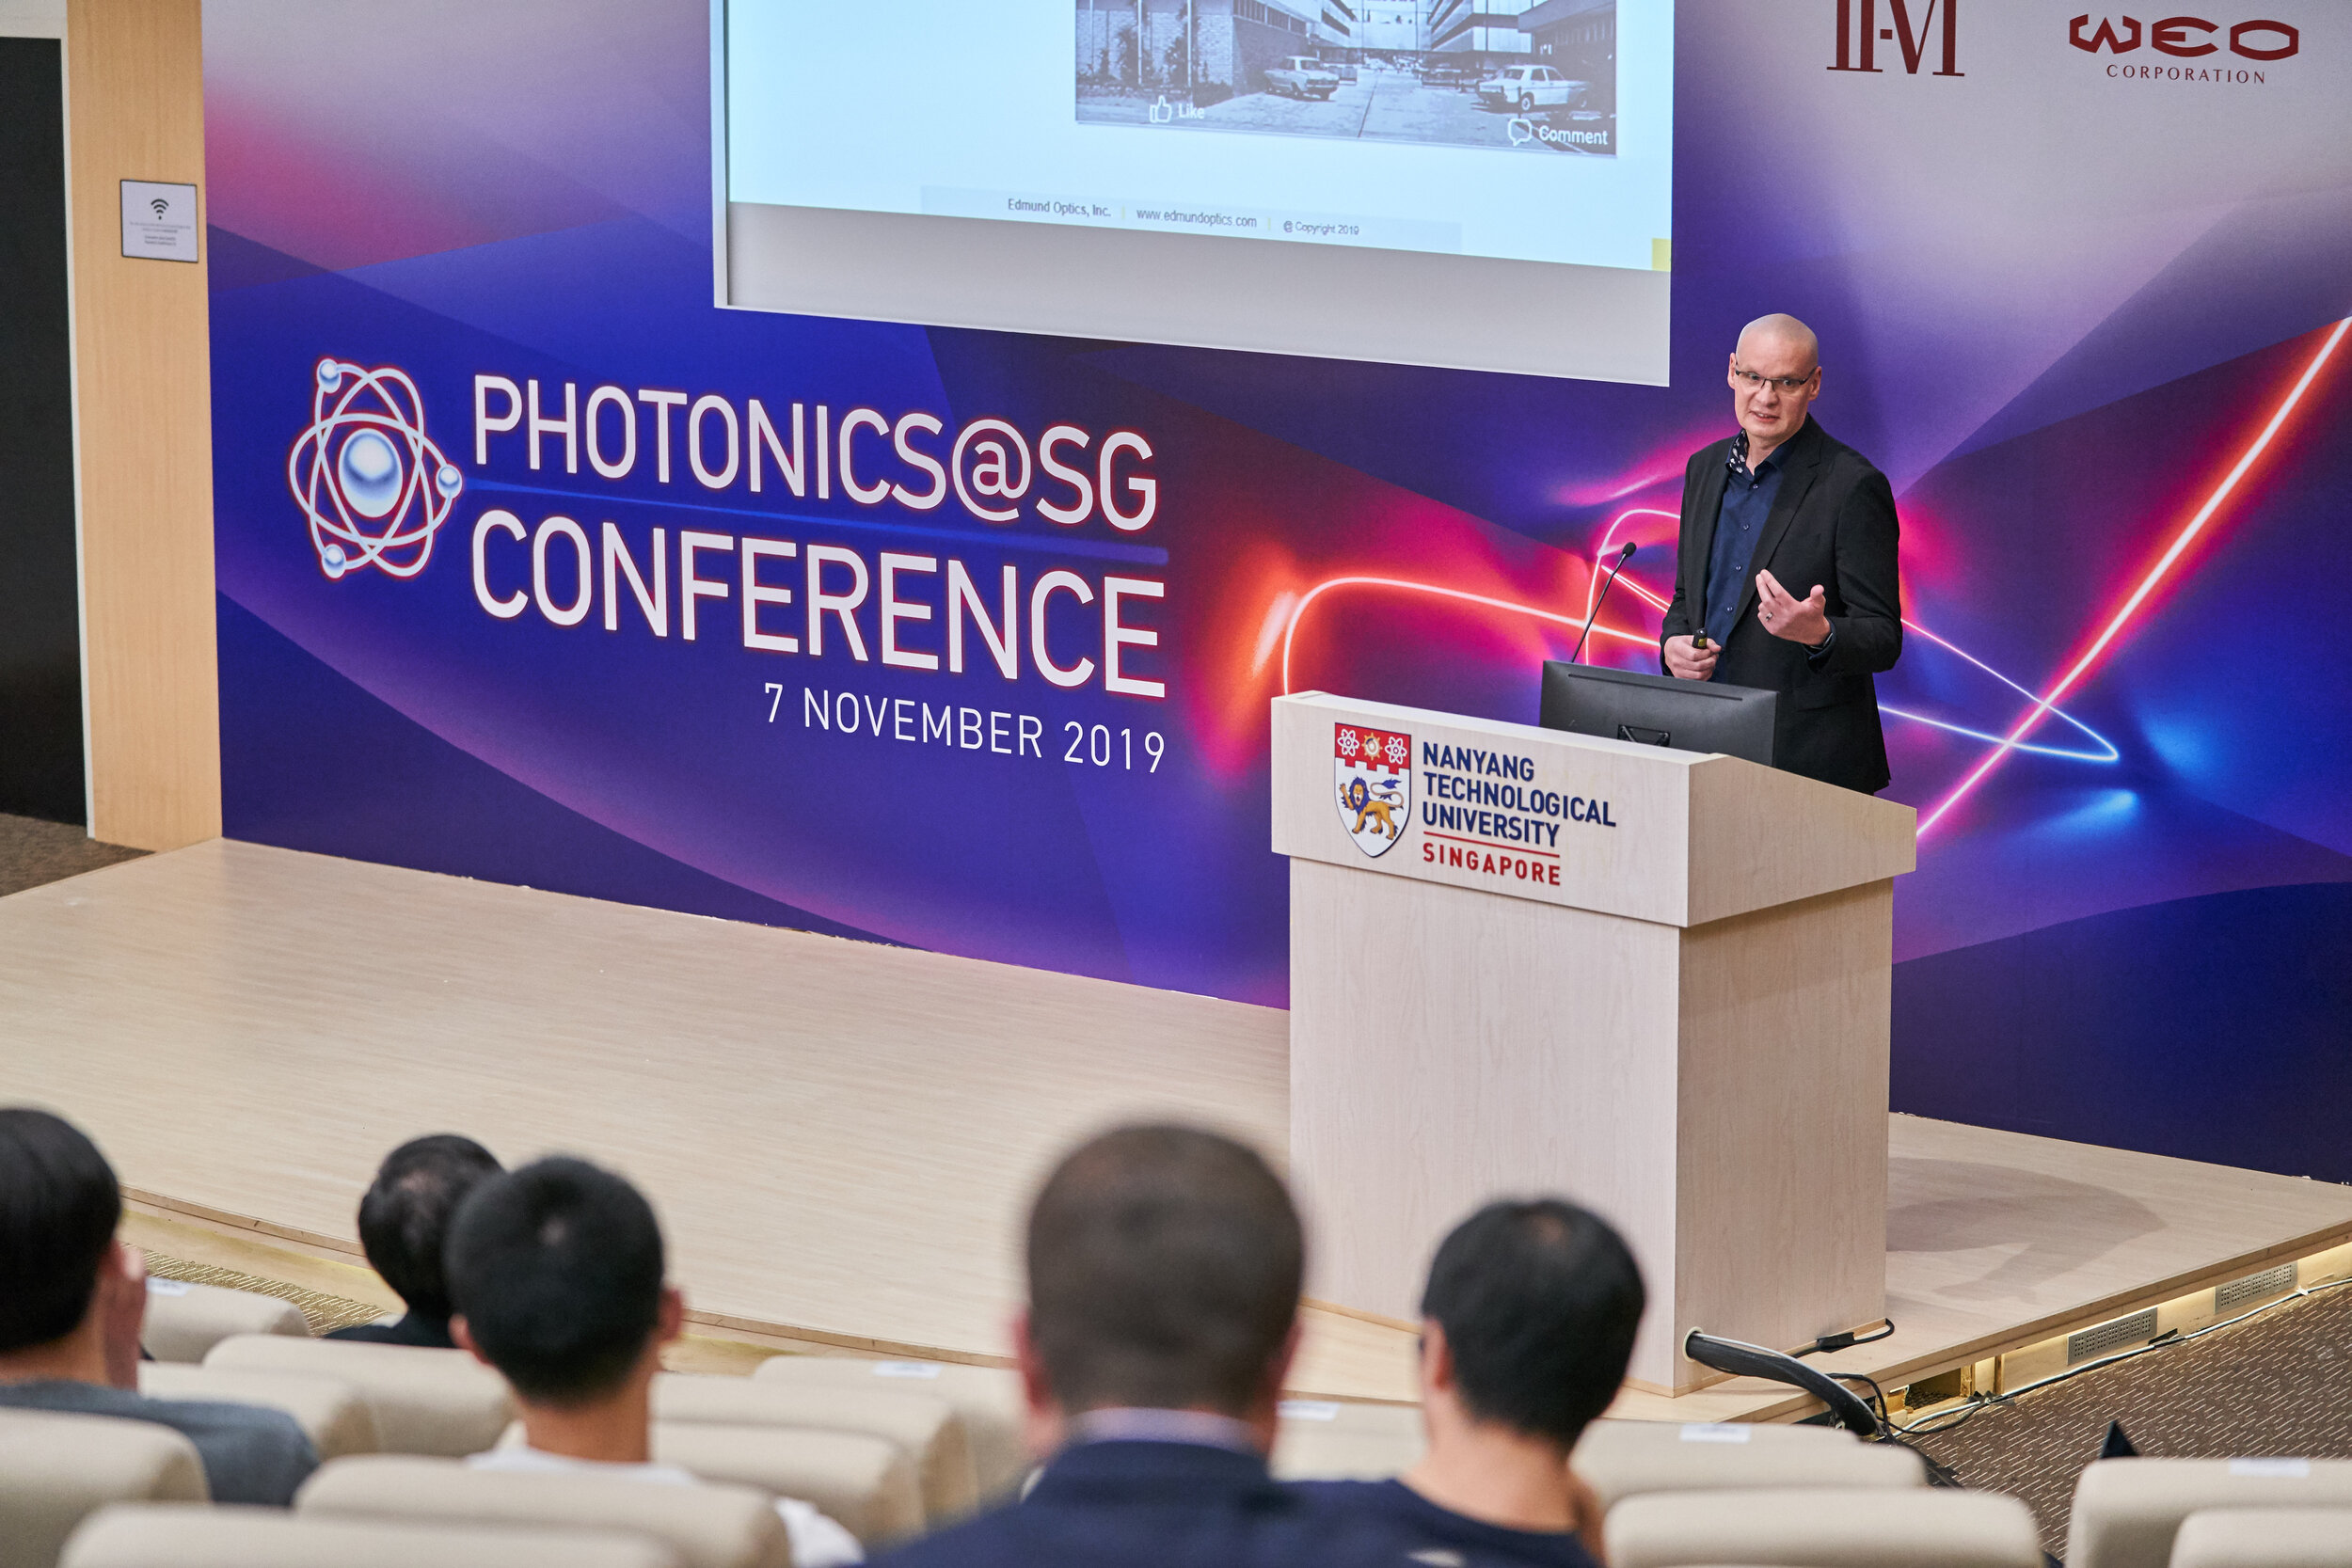 TPI PhotonicsSG 2019 Conference 0340ml.jpg